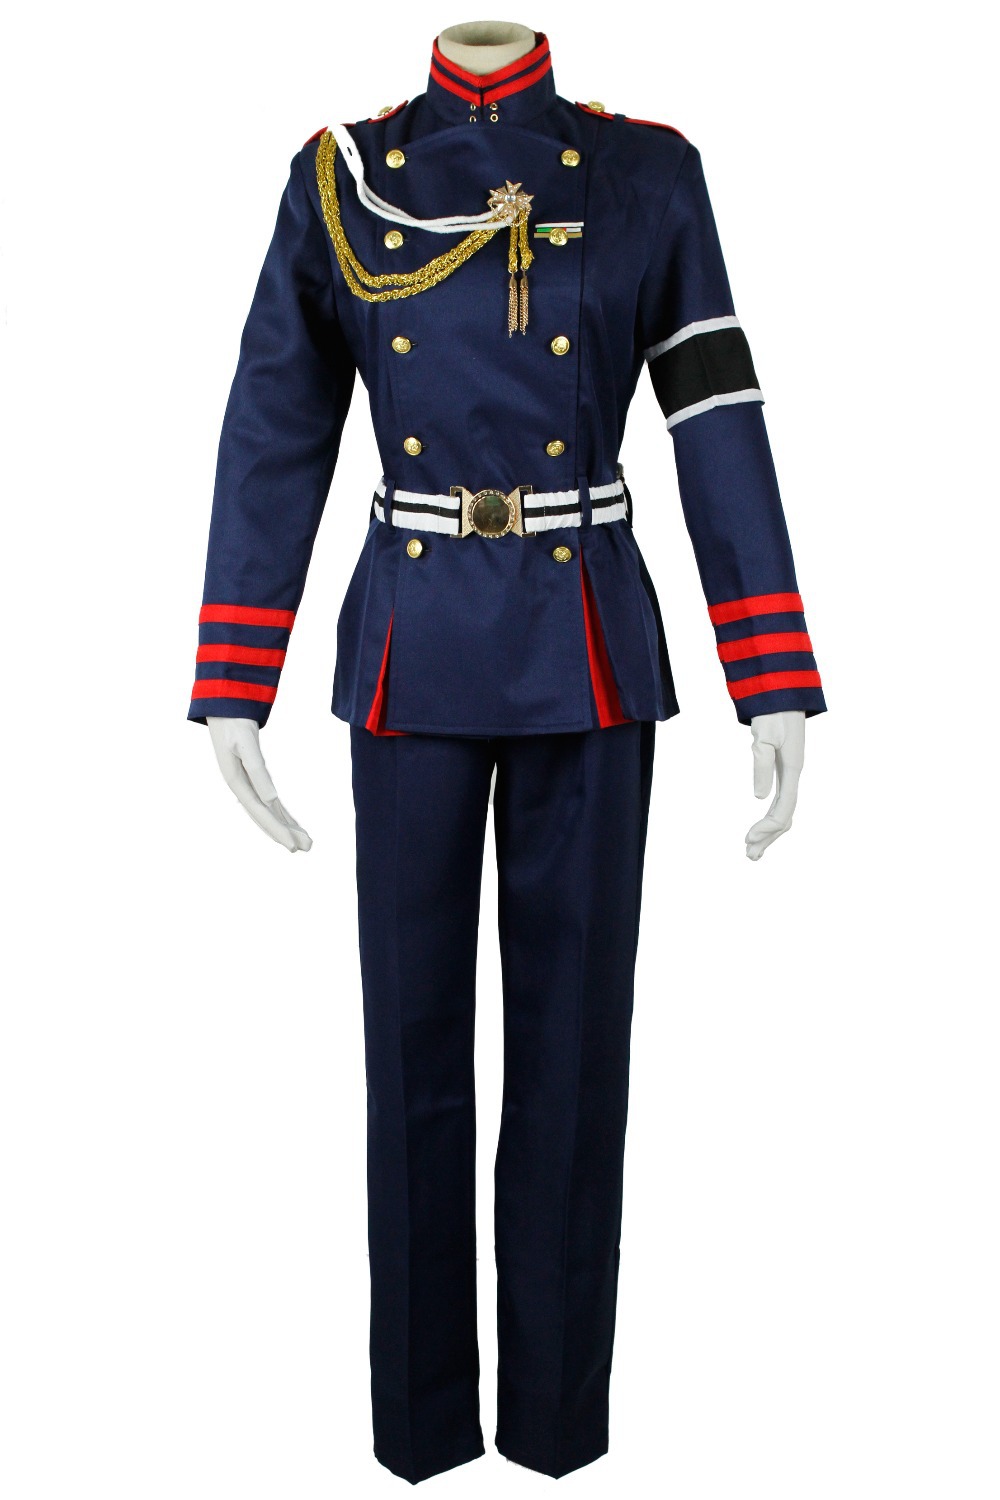 Military In Uniform 111